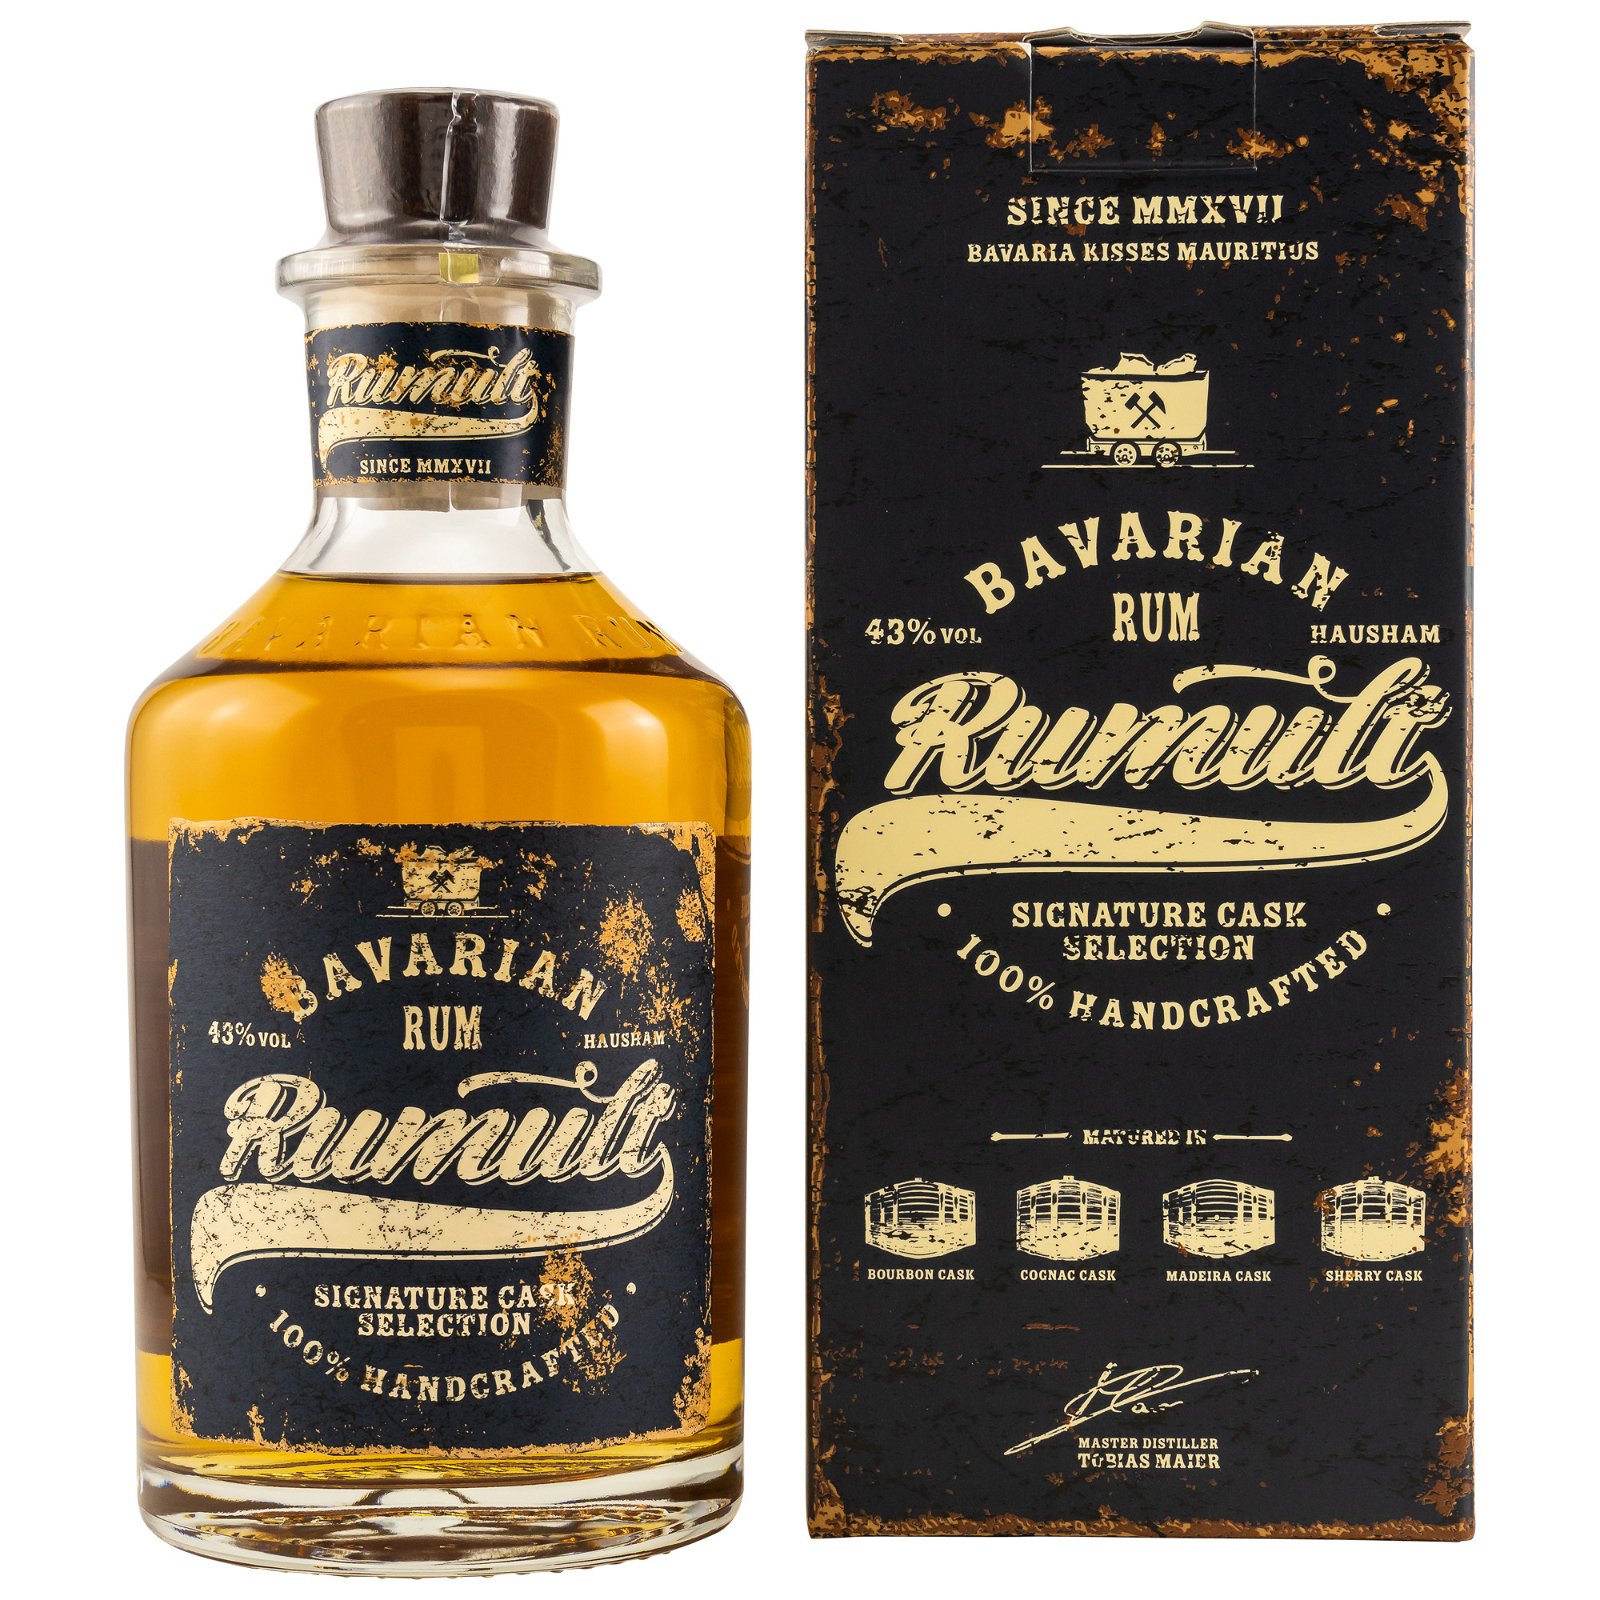 Rumult Bavarian Rum Signature Cask Selection